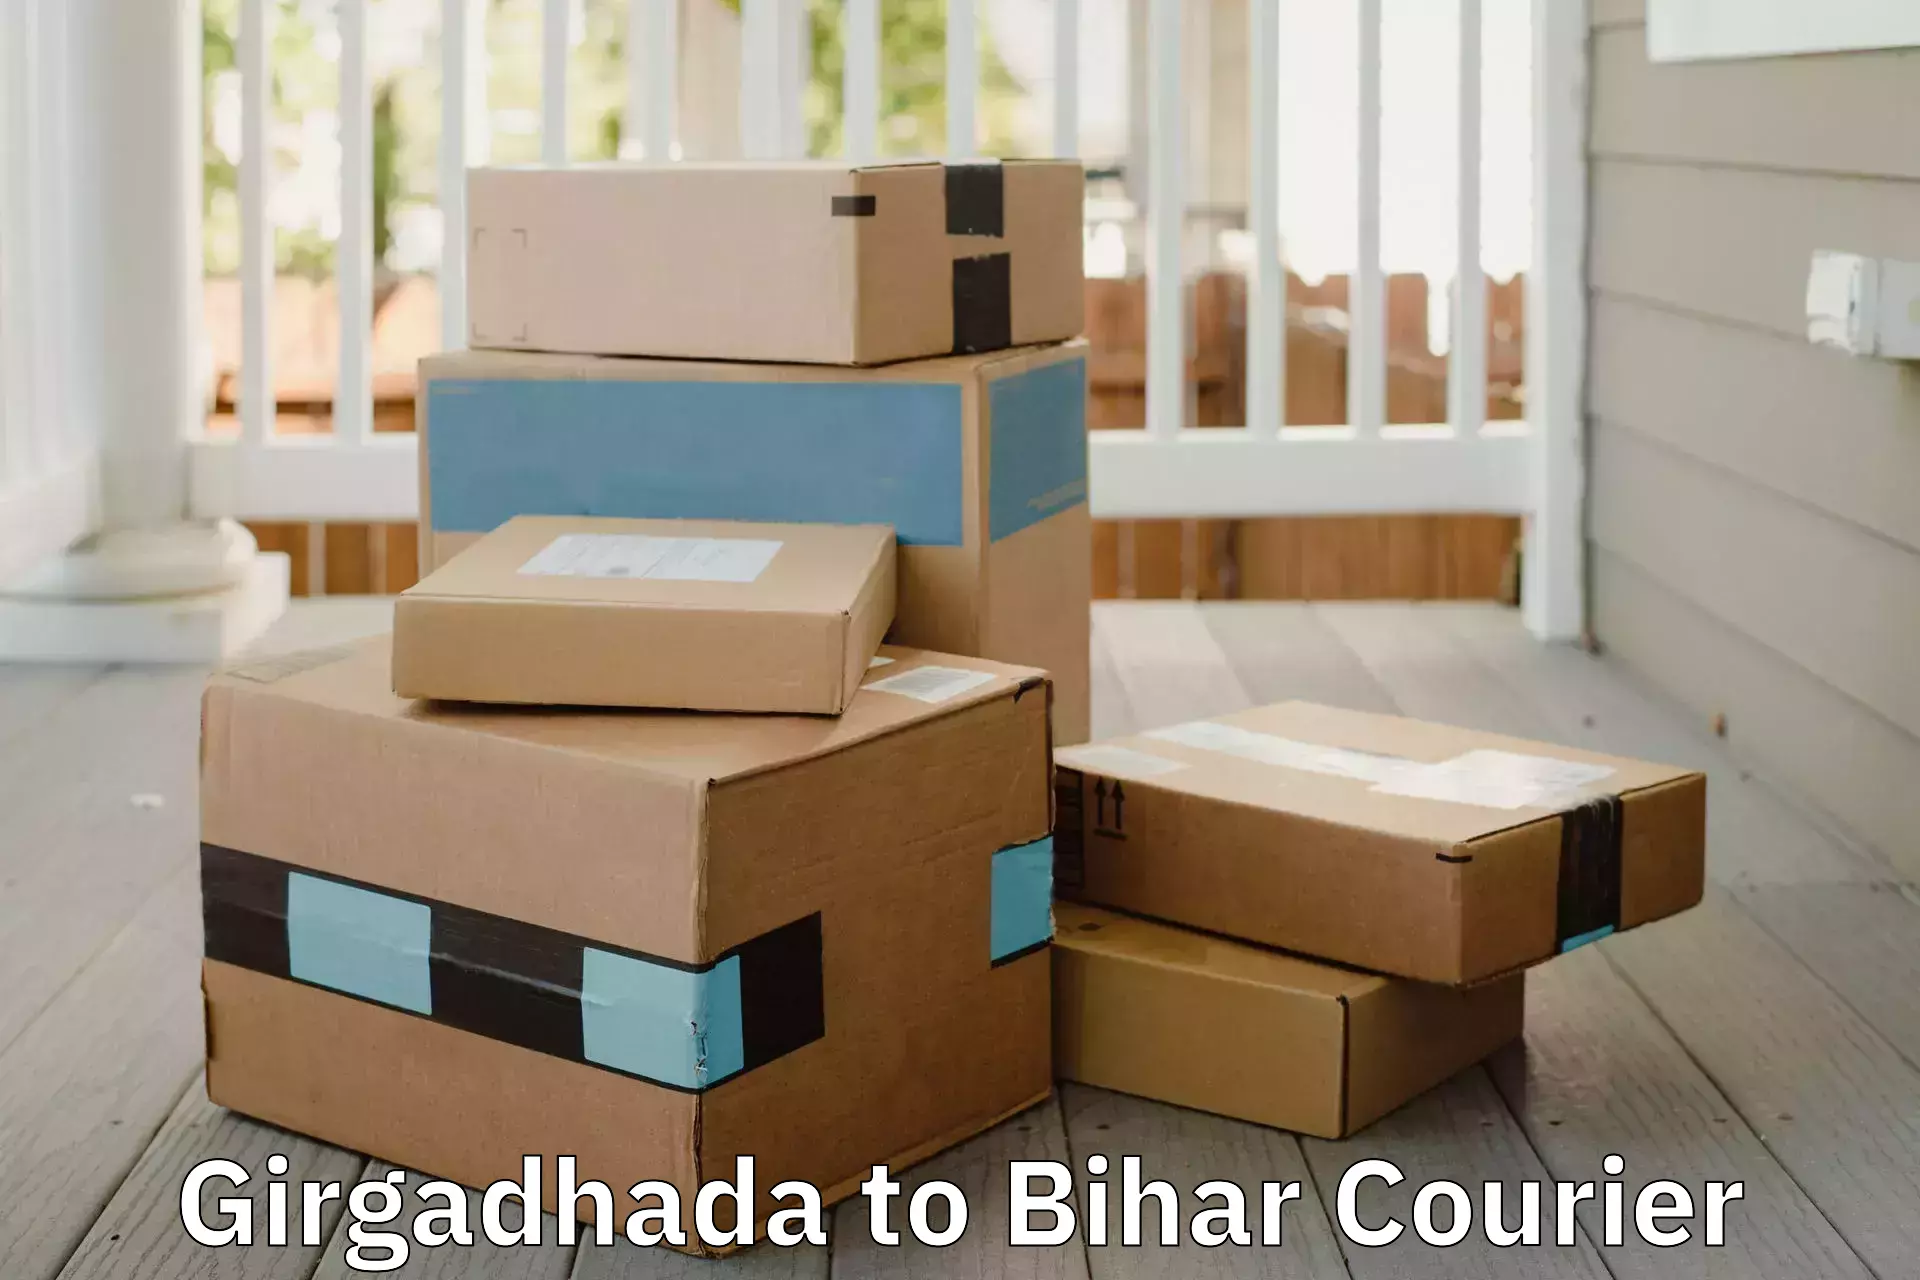 Moving and storage services Girgadhada to Bihar